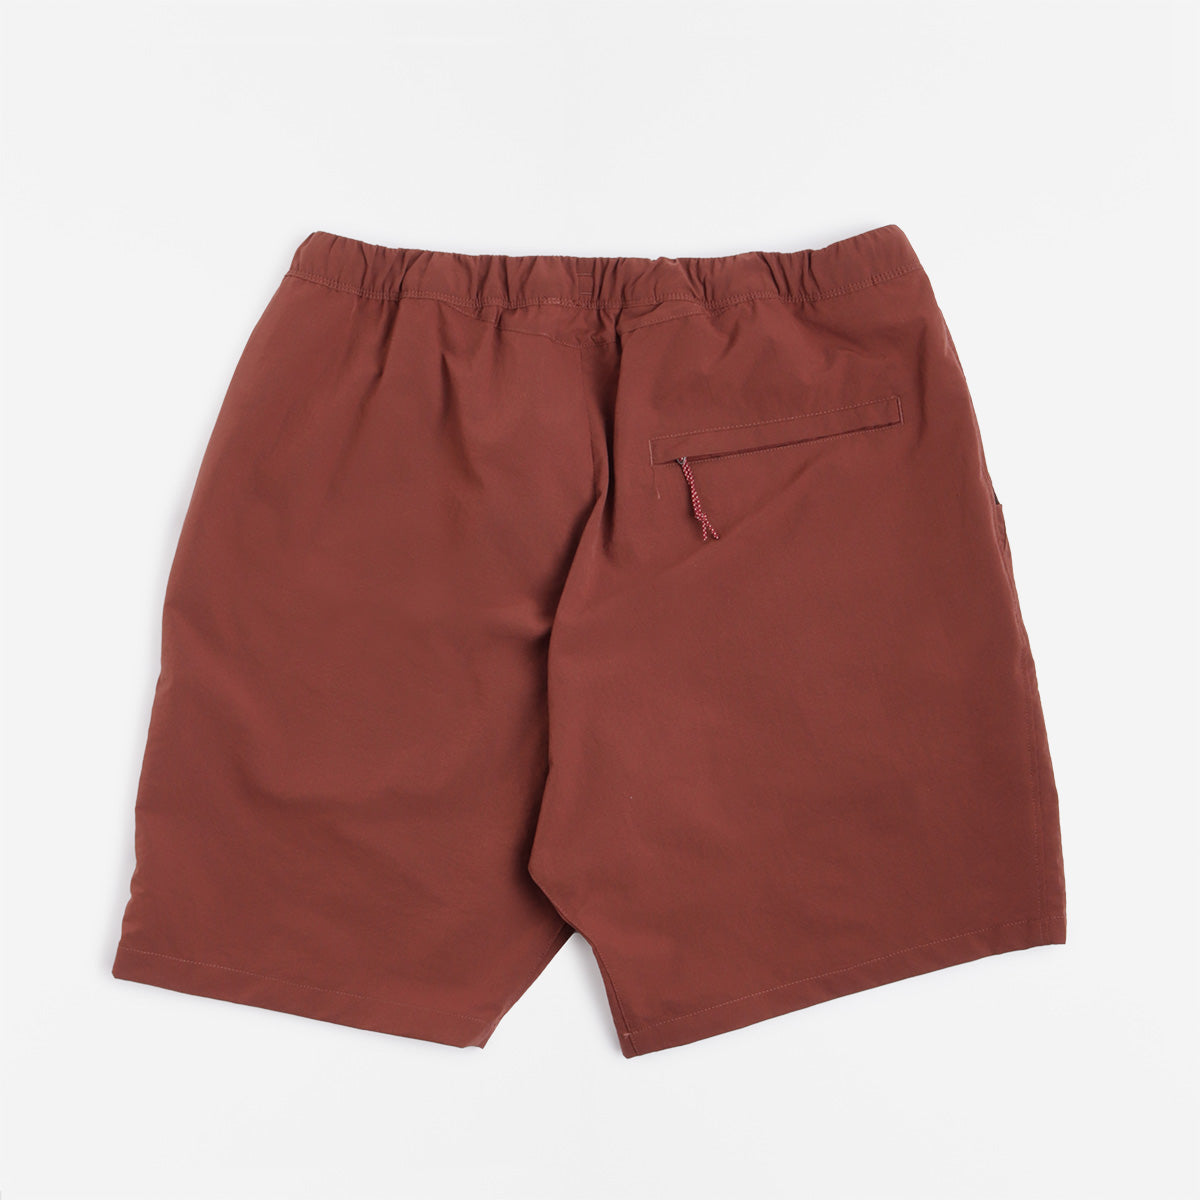 Nanga Dot Air Comfy Shorts, Brown, Detail Shot 4